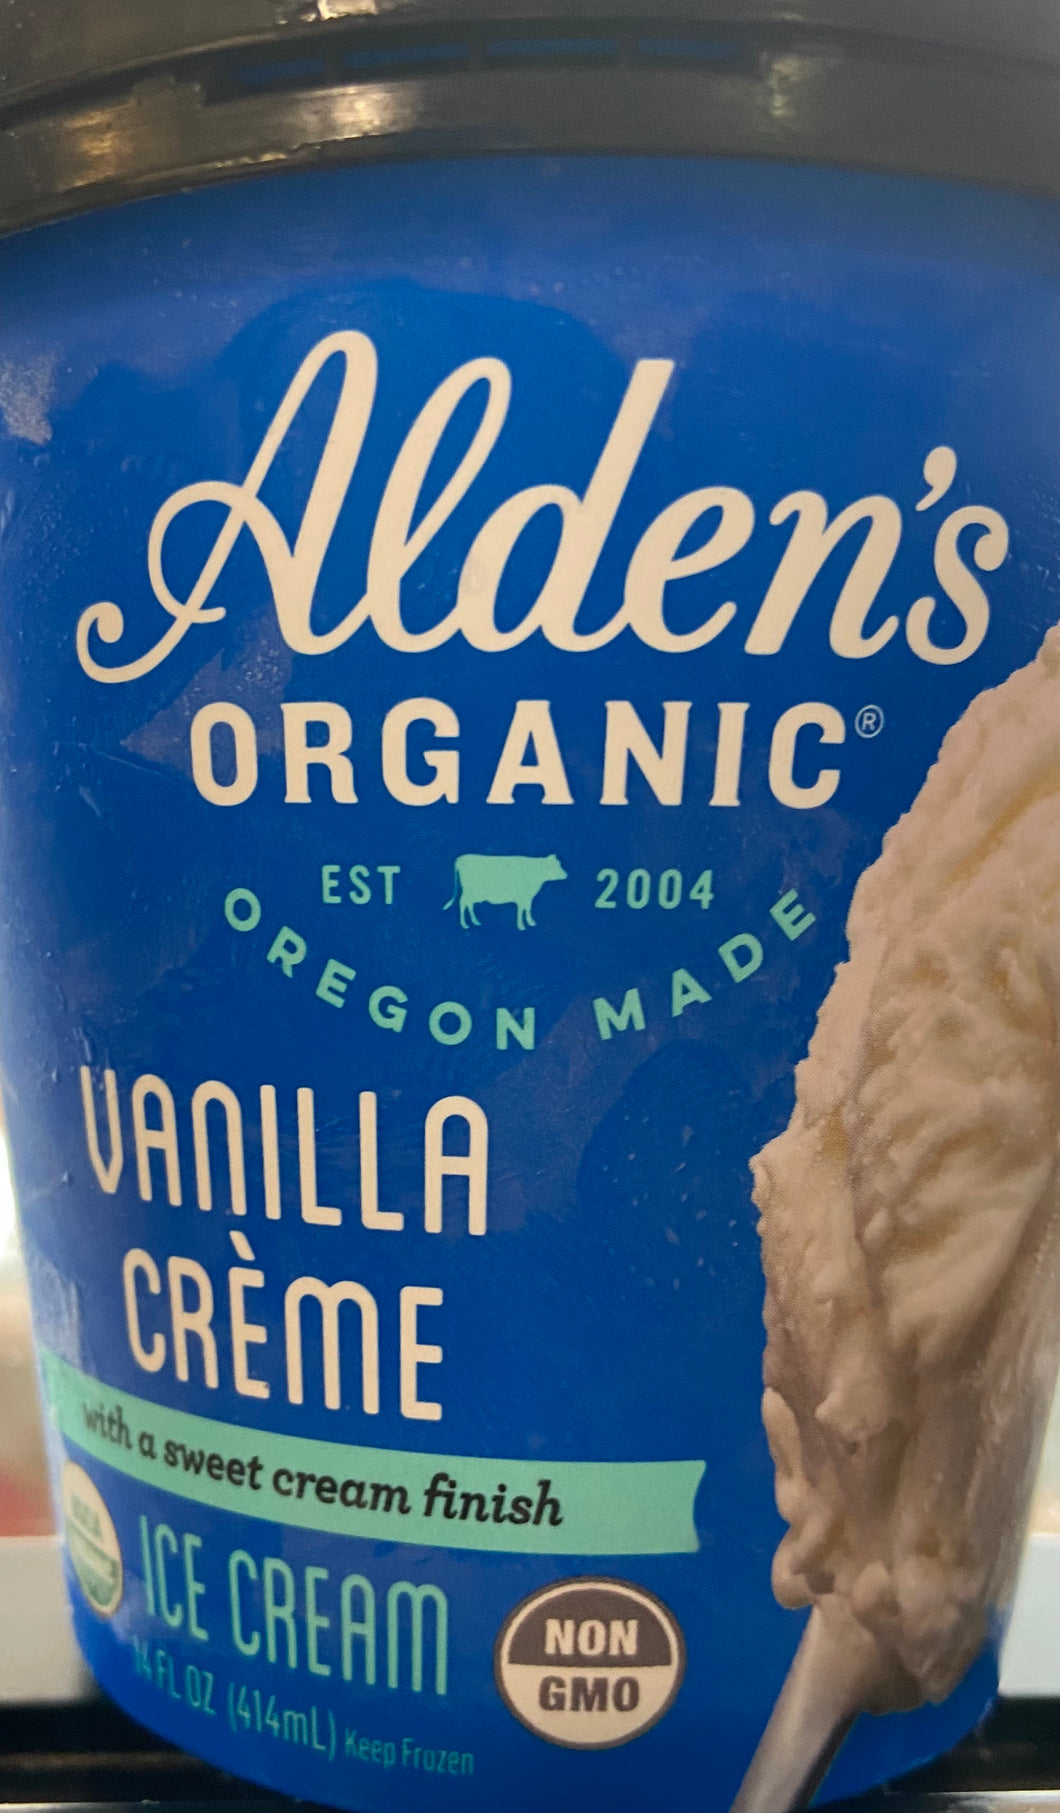 Vanilla ice cream, Alden’s, organic